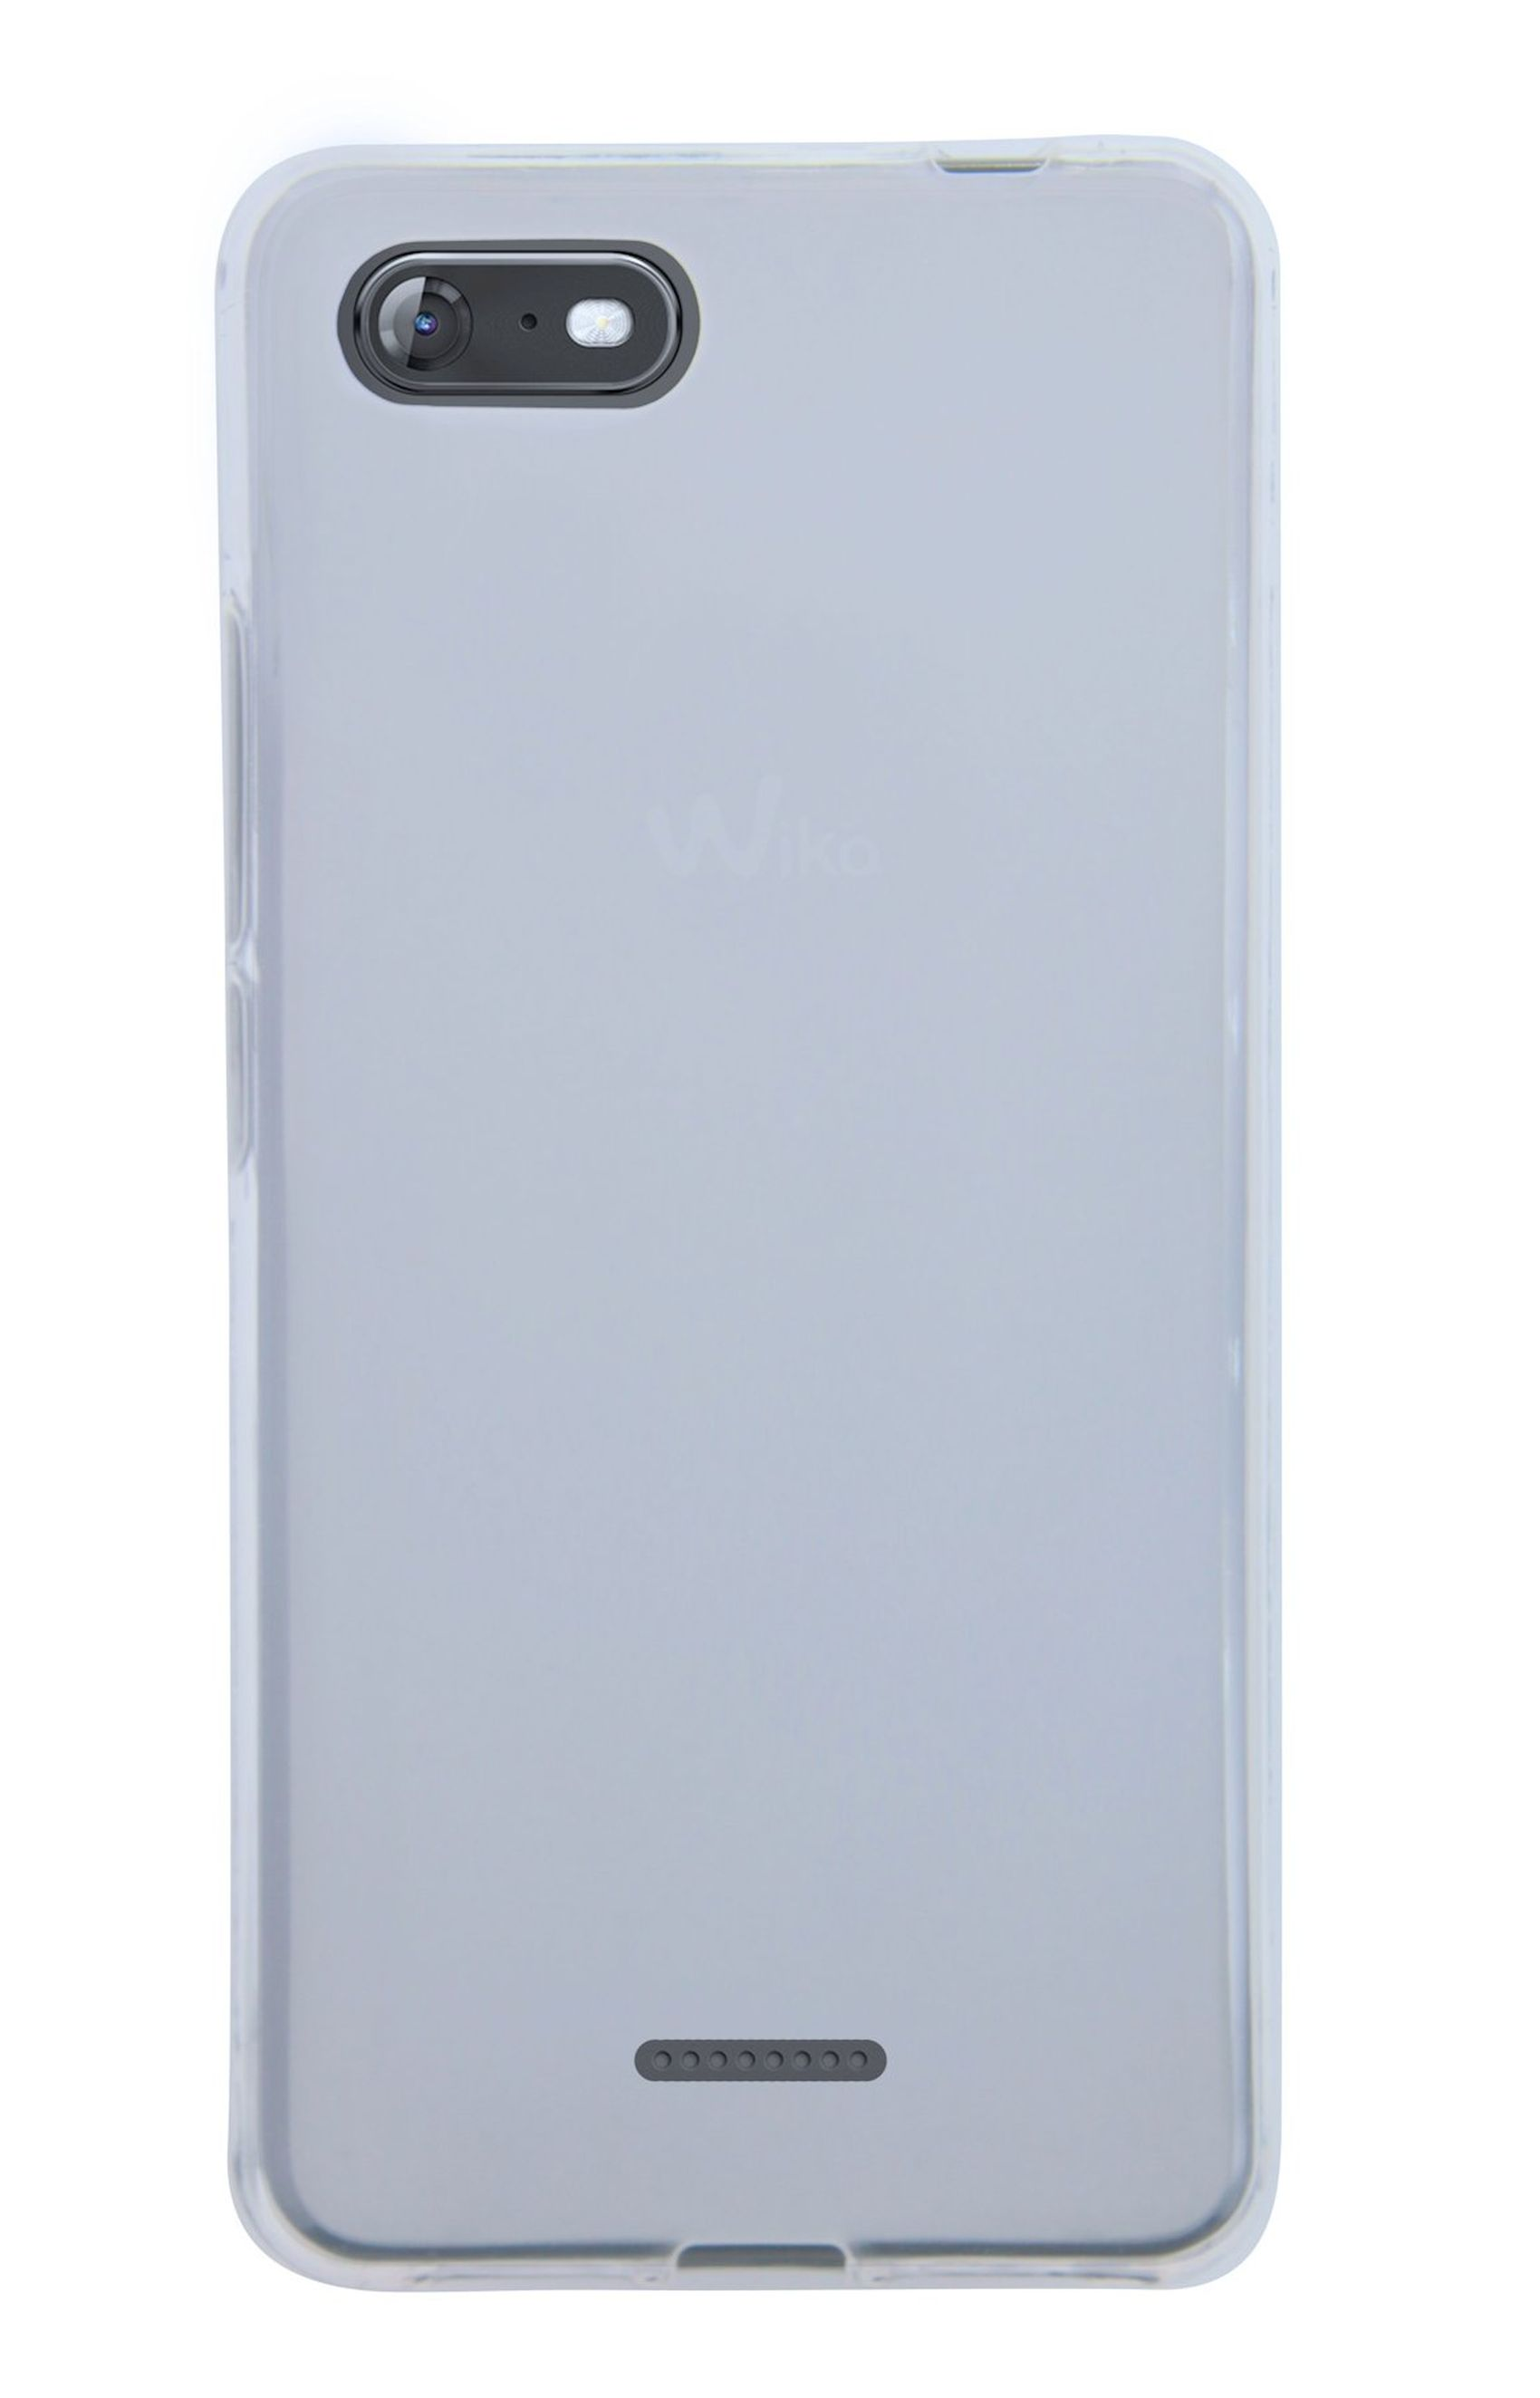 3 Basic TOMMY Transparent Soft mit Frosted, Handy Hülle Case kompatibel Tommy Cover 3, Silikon WIKO Schutz Bumper, COFI Wiko, cofi1453® TPU